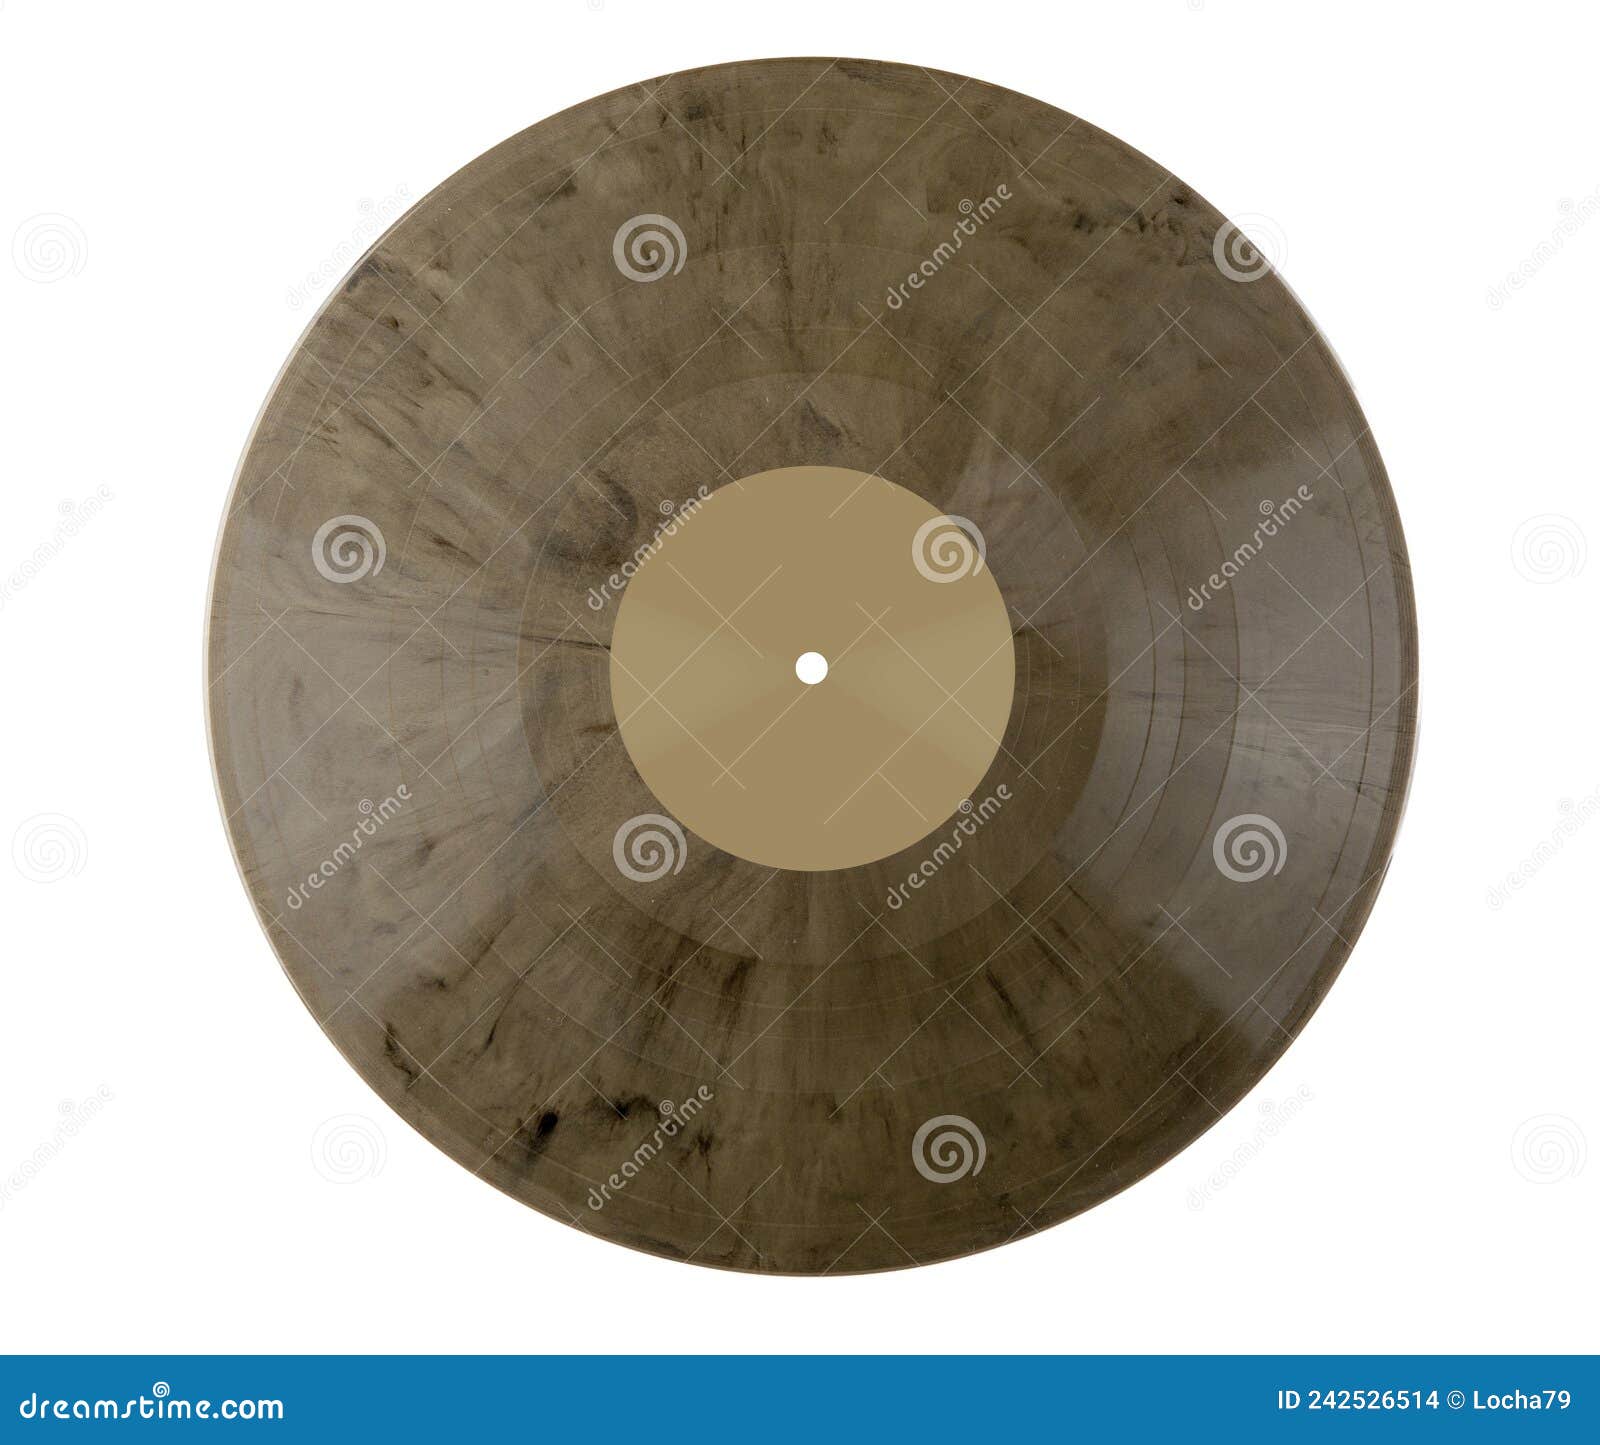 vinyl record, analog music carrier